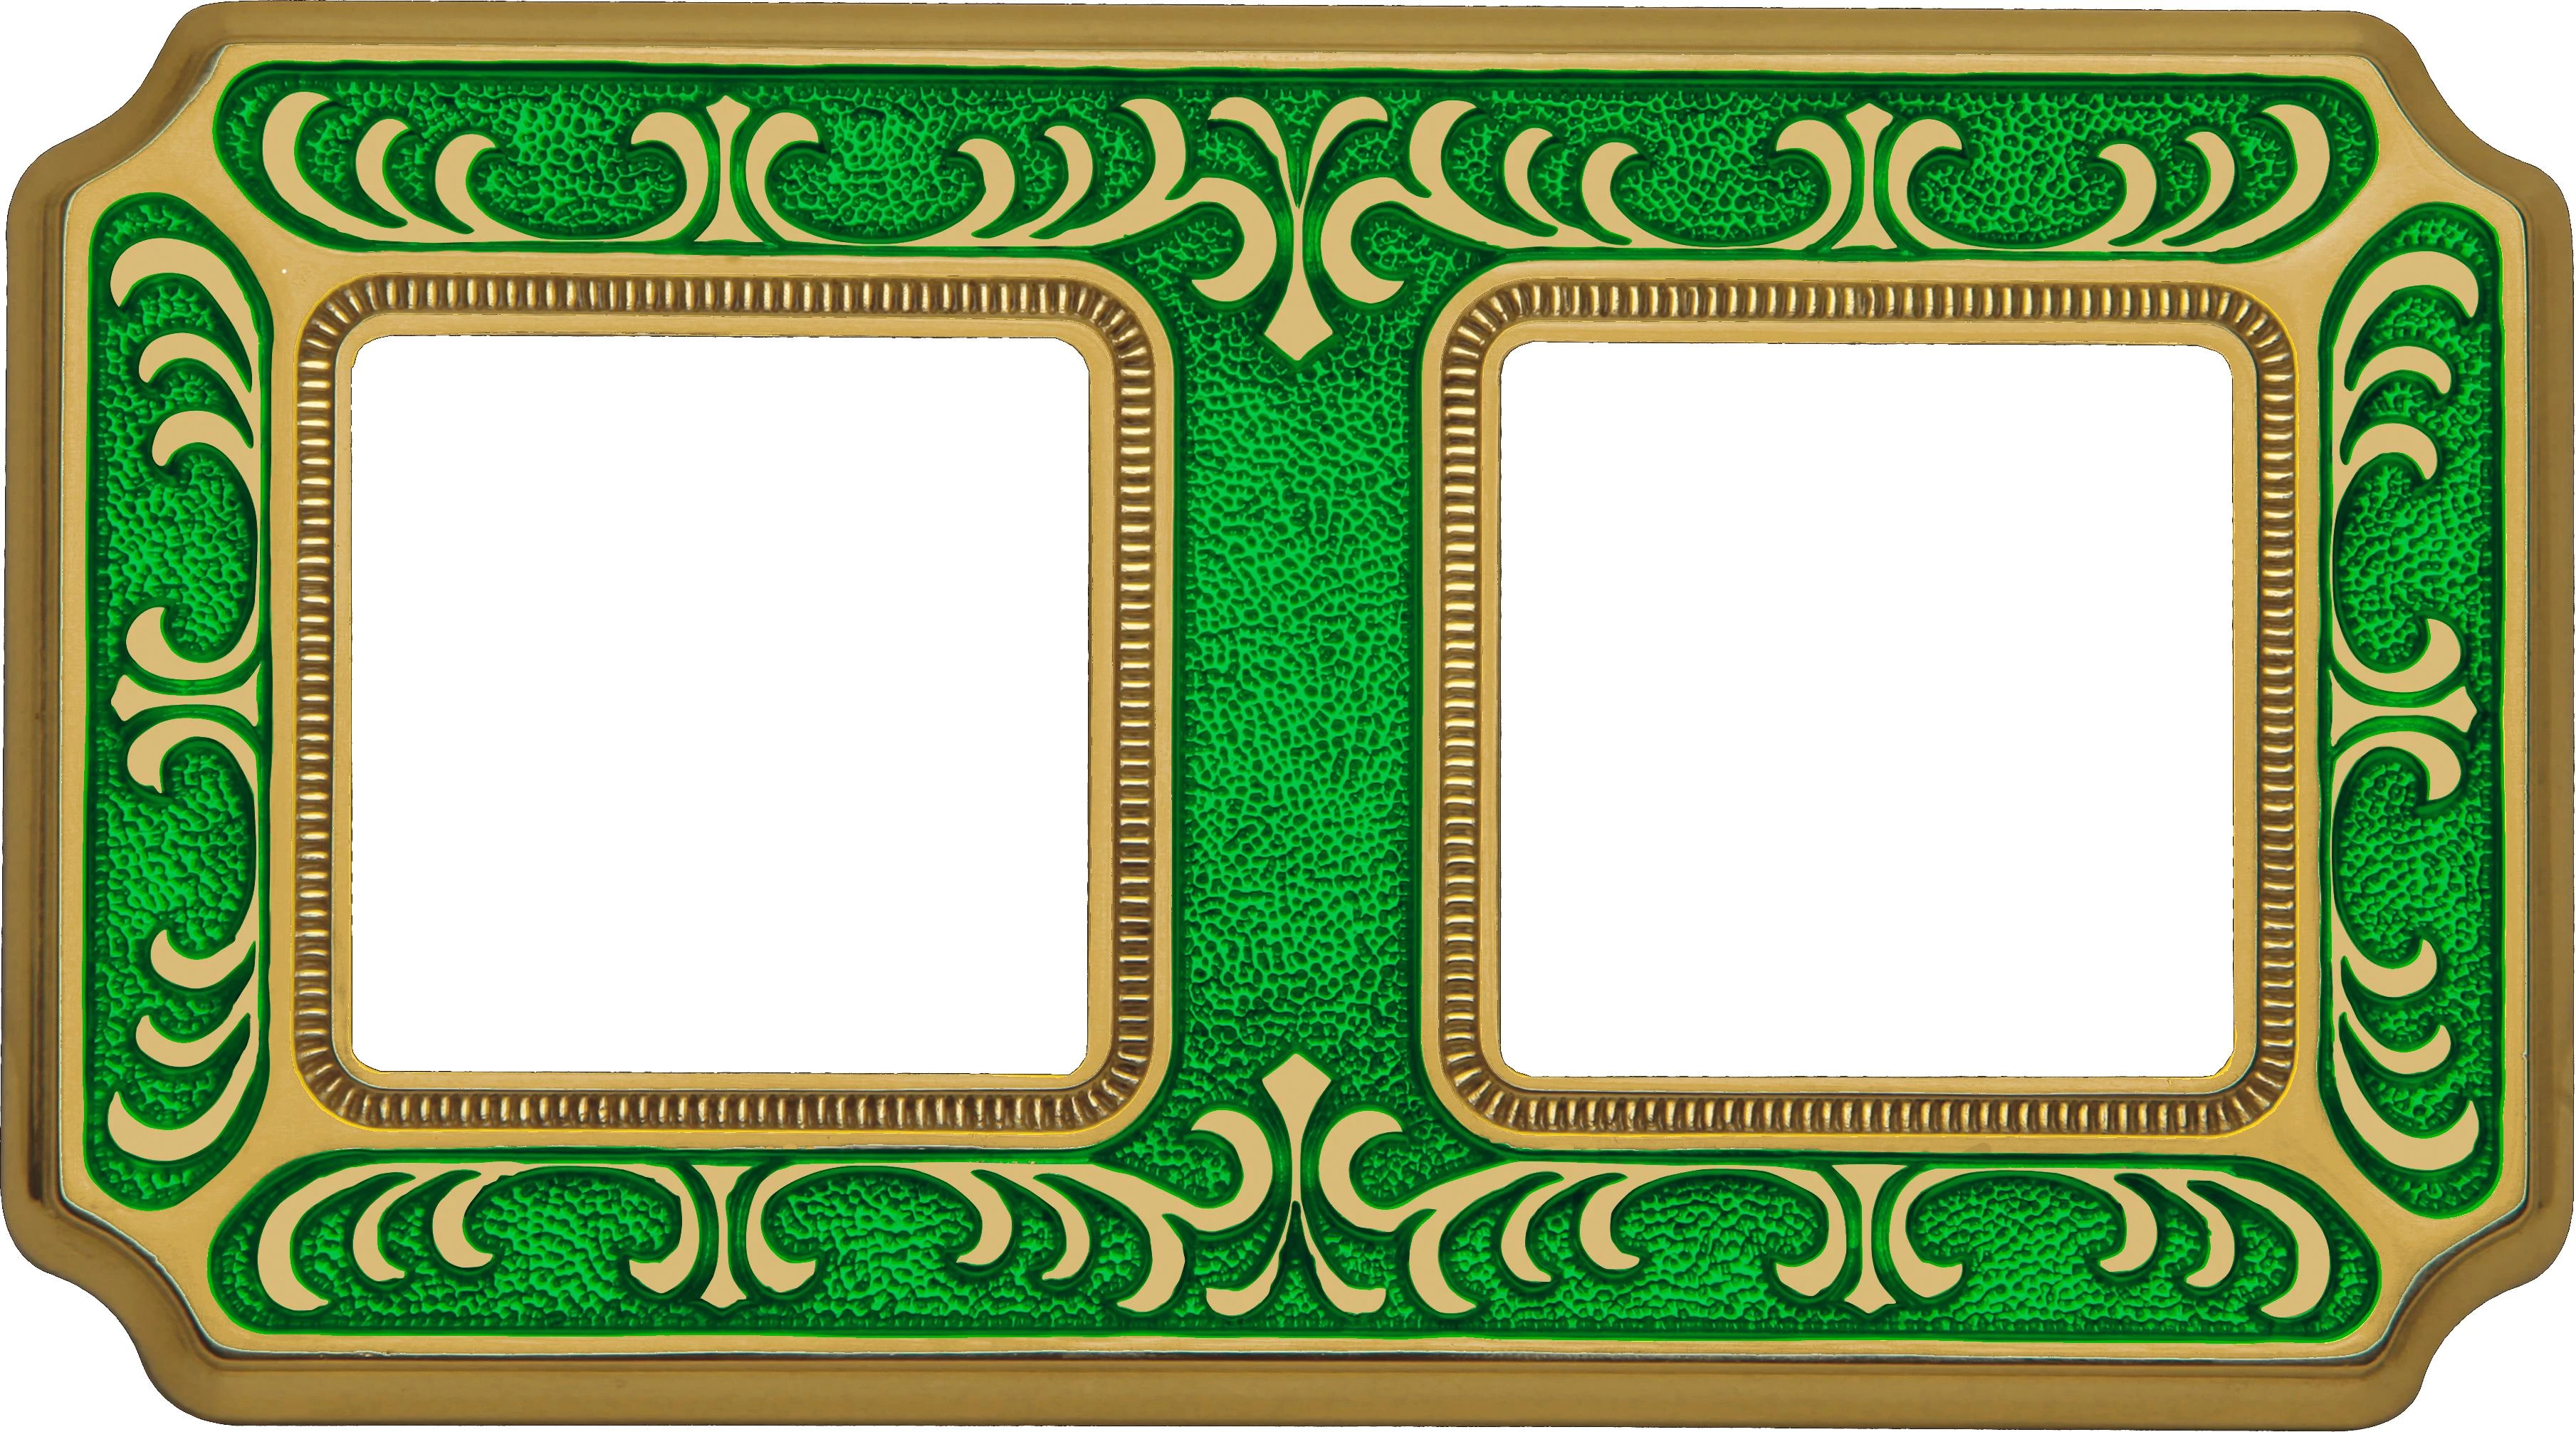 артикул FD01352VEEN название Рамка 2-ая (двойная), Fede, Серия Siena, Изумрудно-зеленый